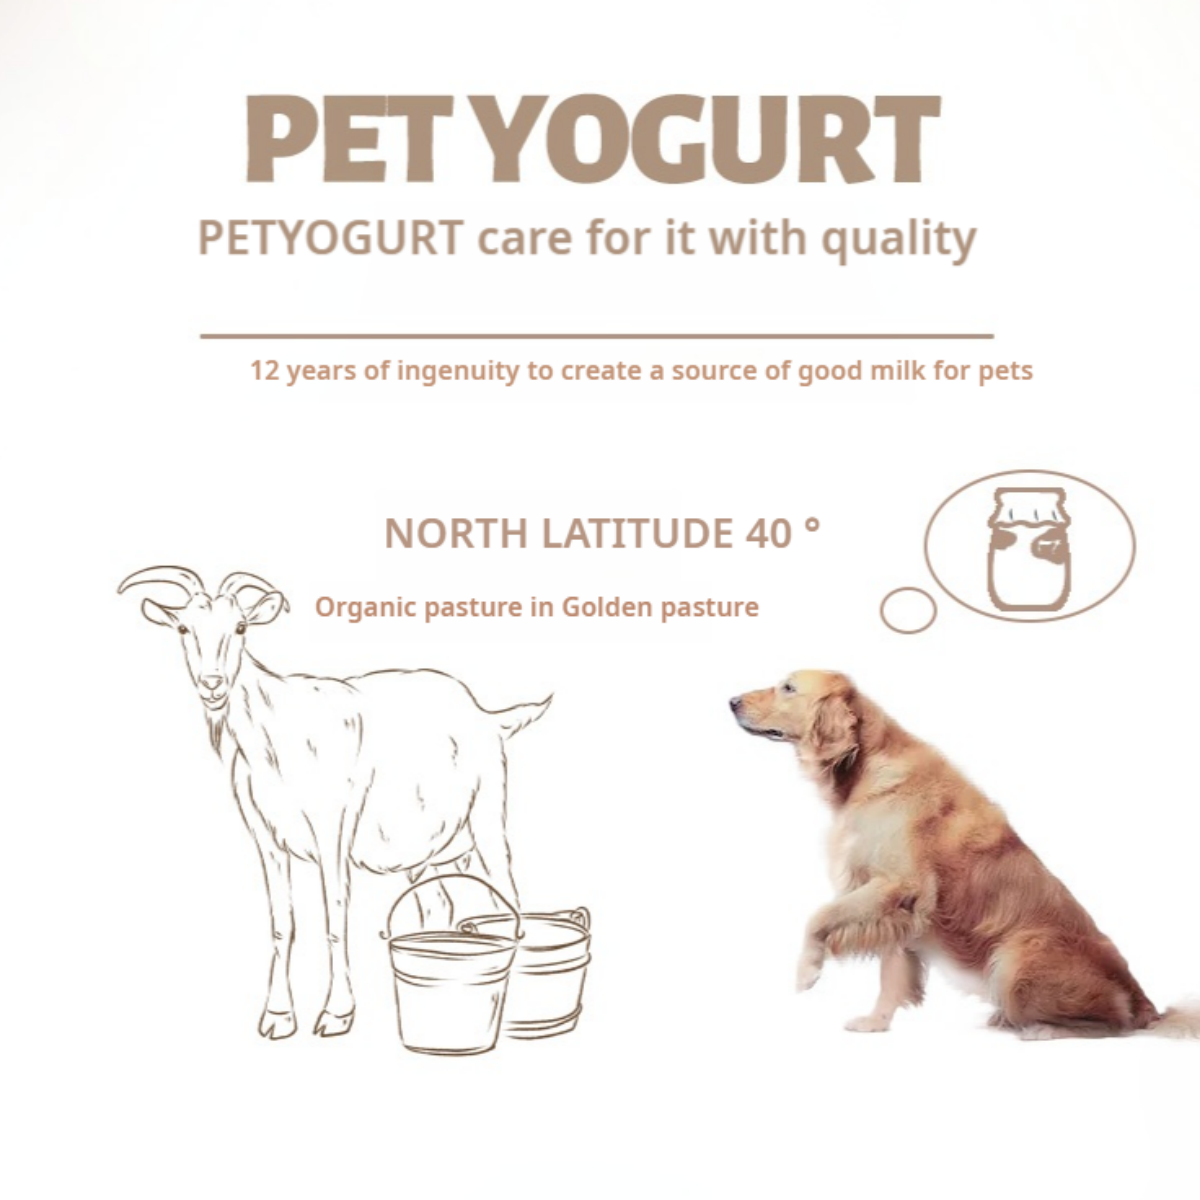 Mengbei sheep milk yogurt dog and cat universal dog treats